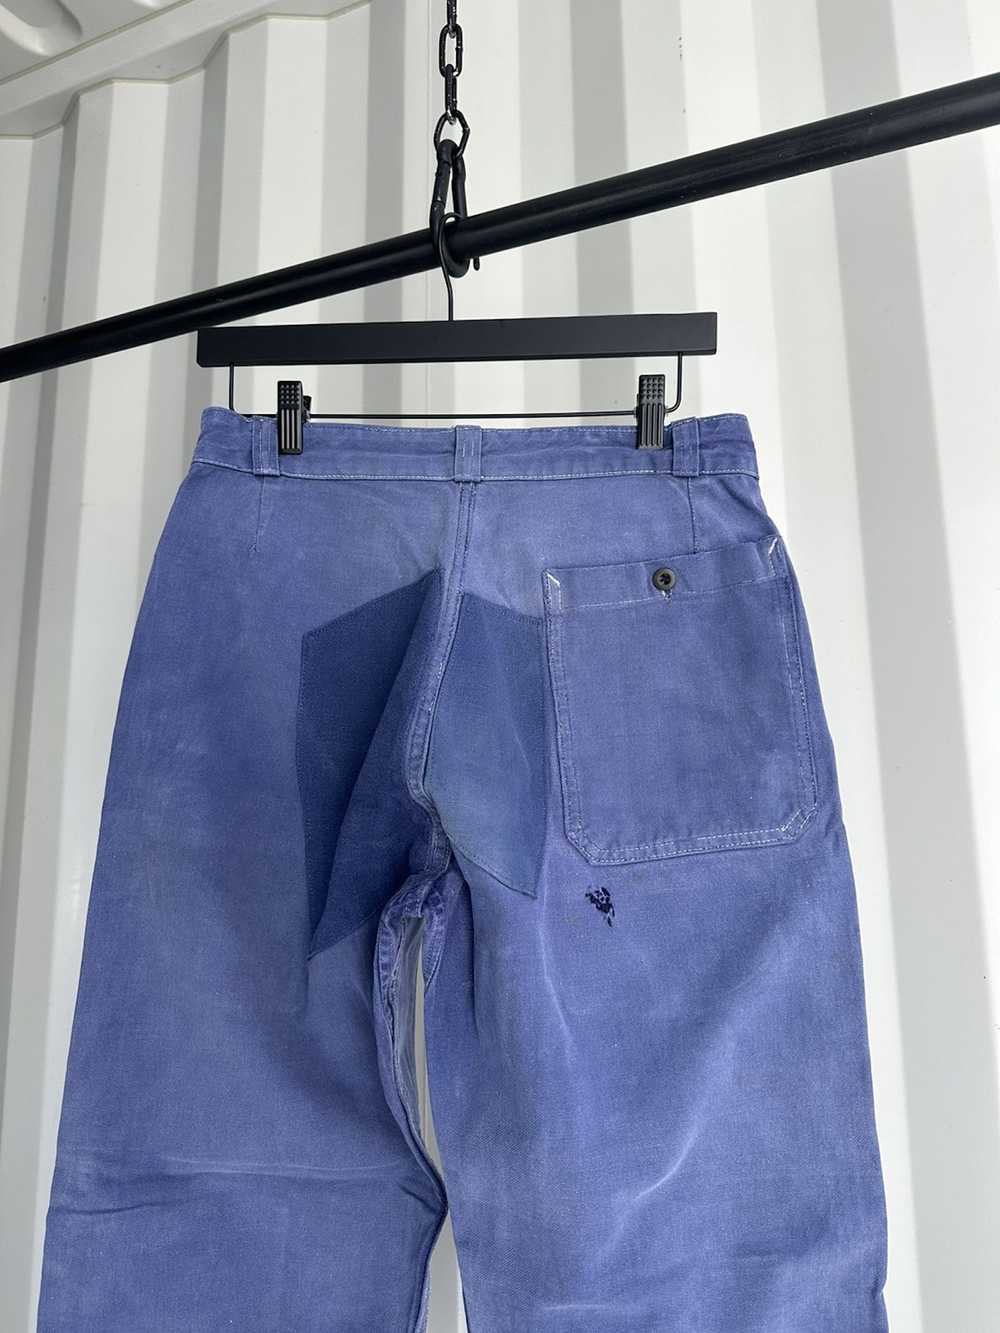 Vintage French Moleskin Chore Pants Workwear Dist… - image 4